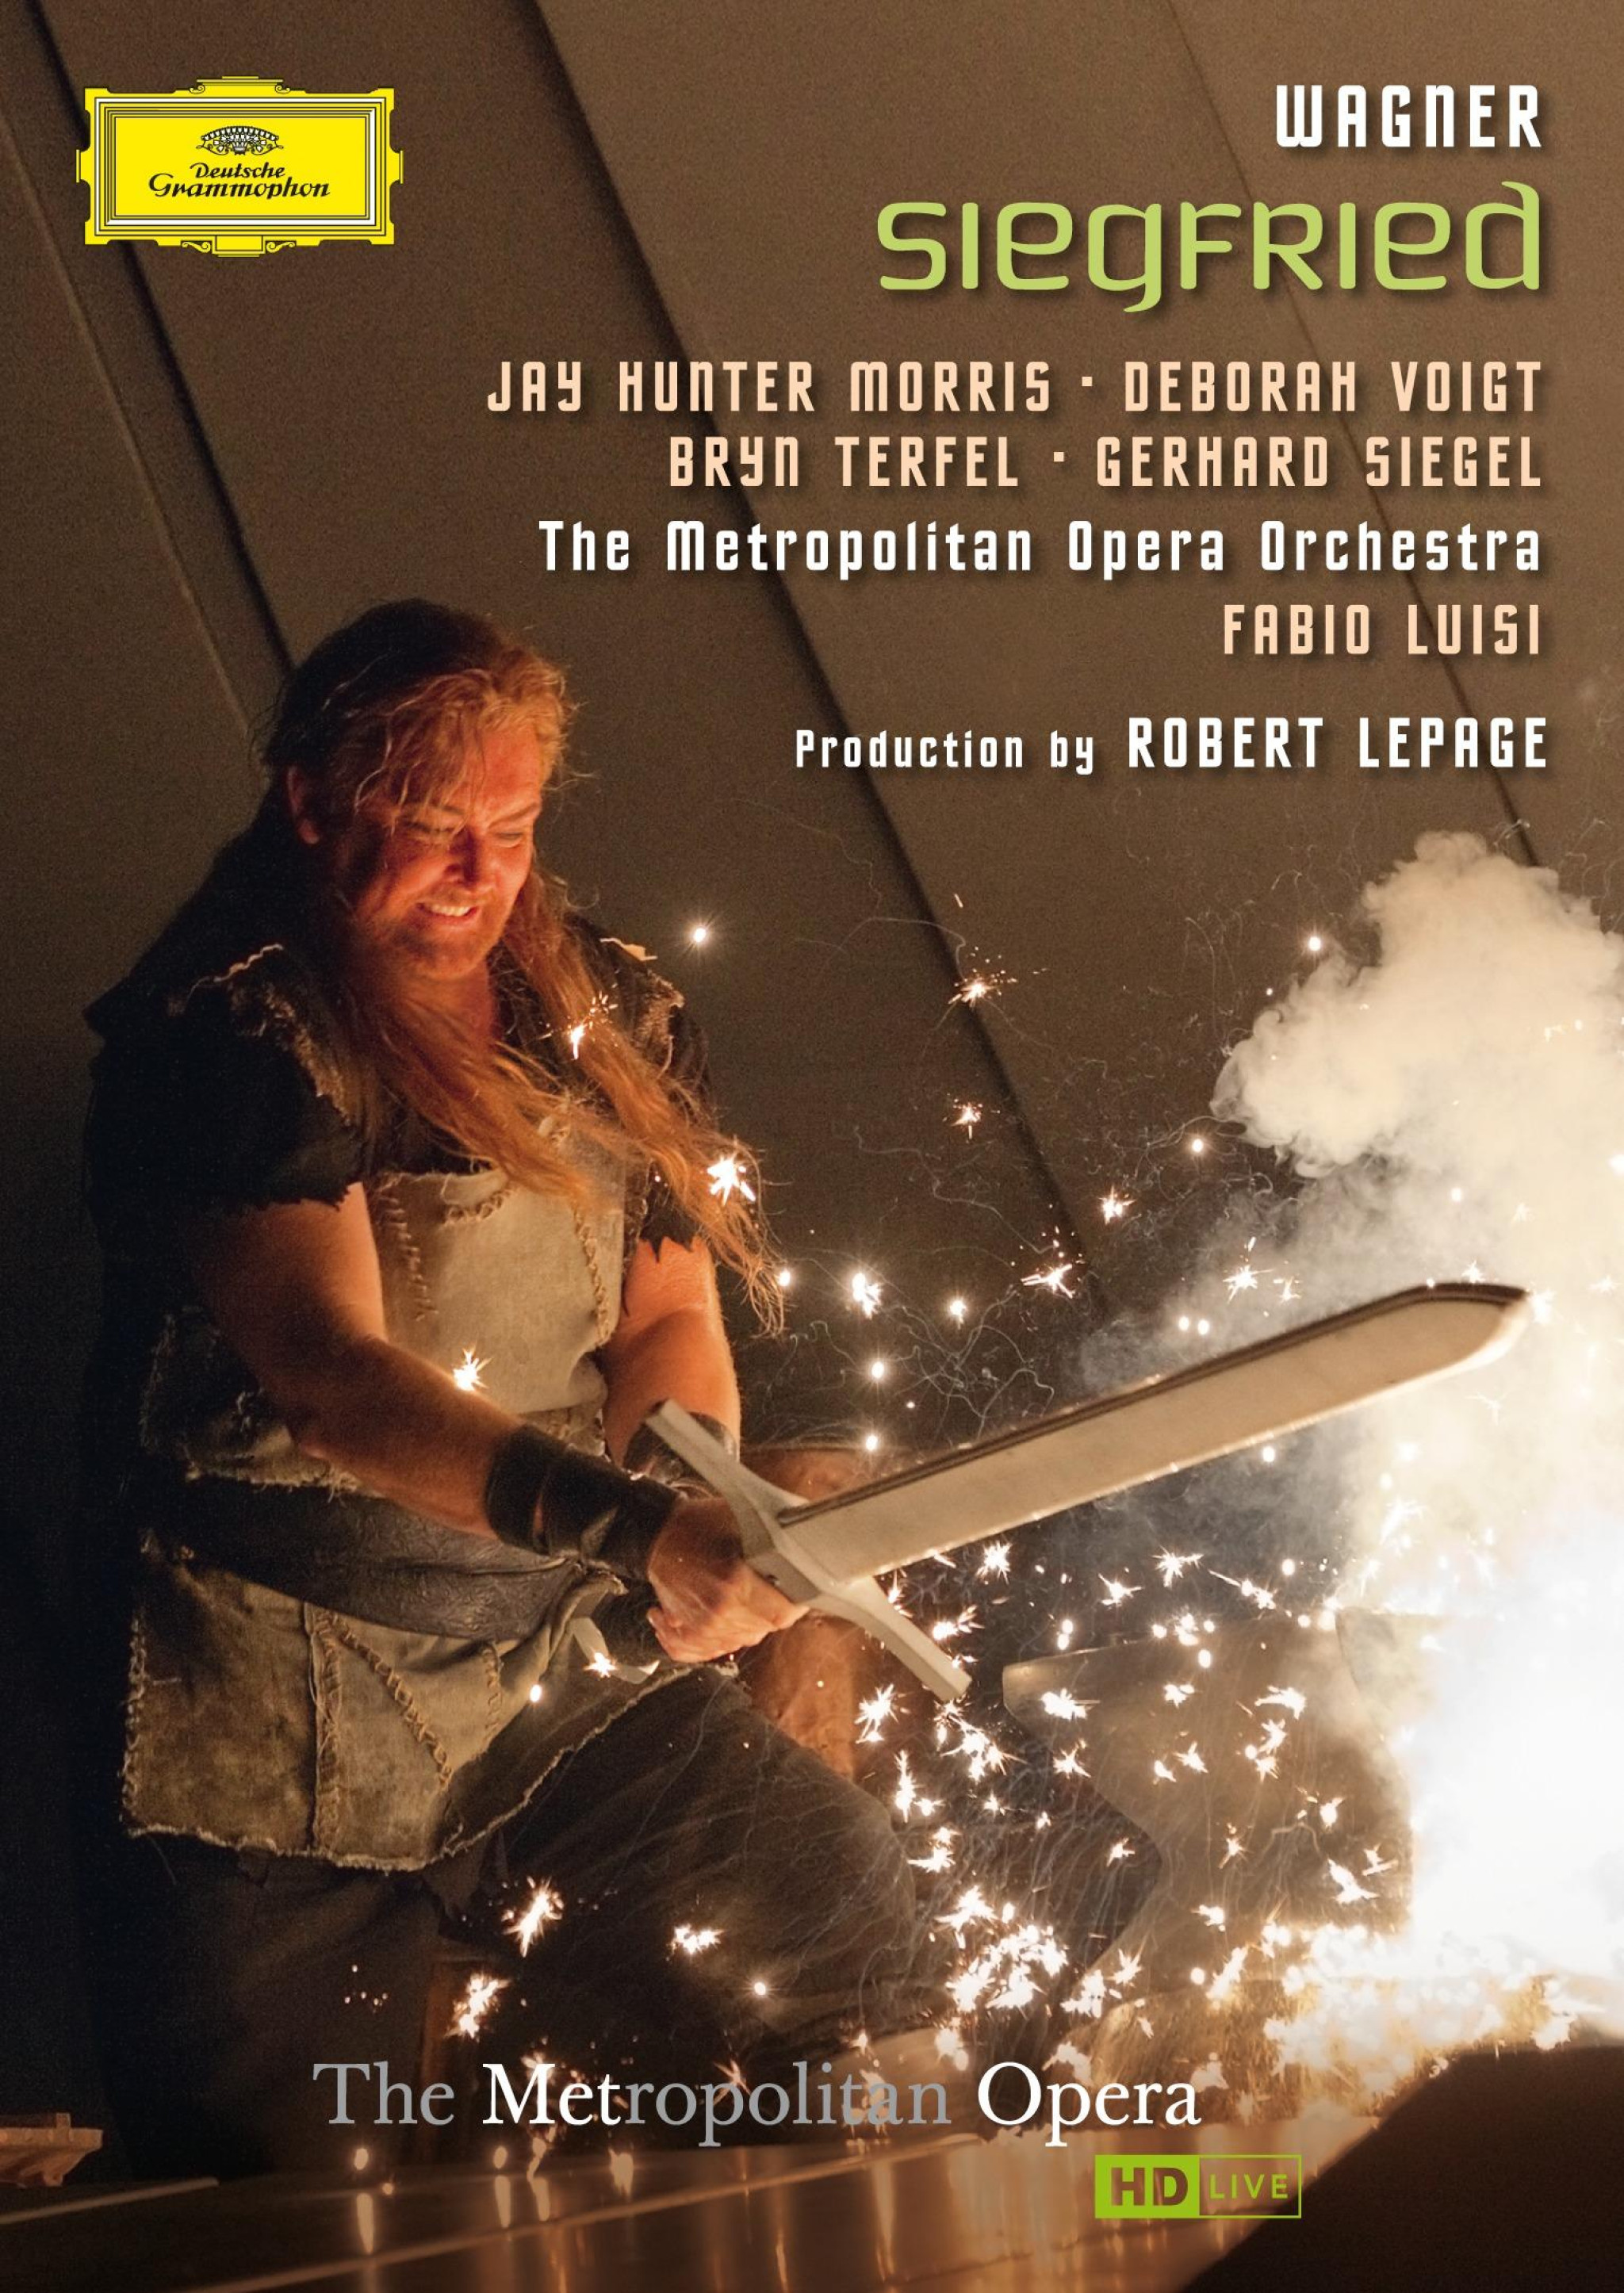 Wagner: Siegfried DVD